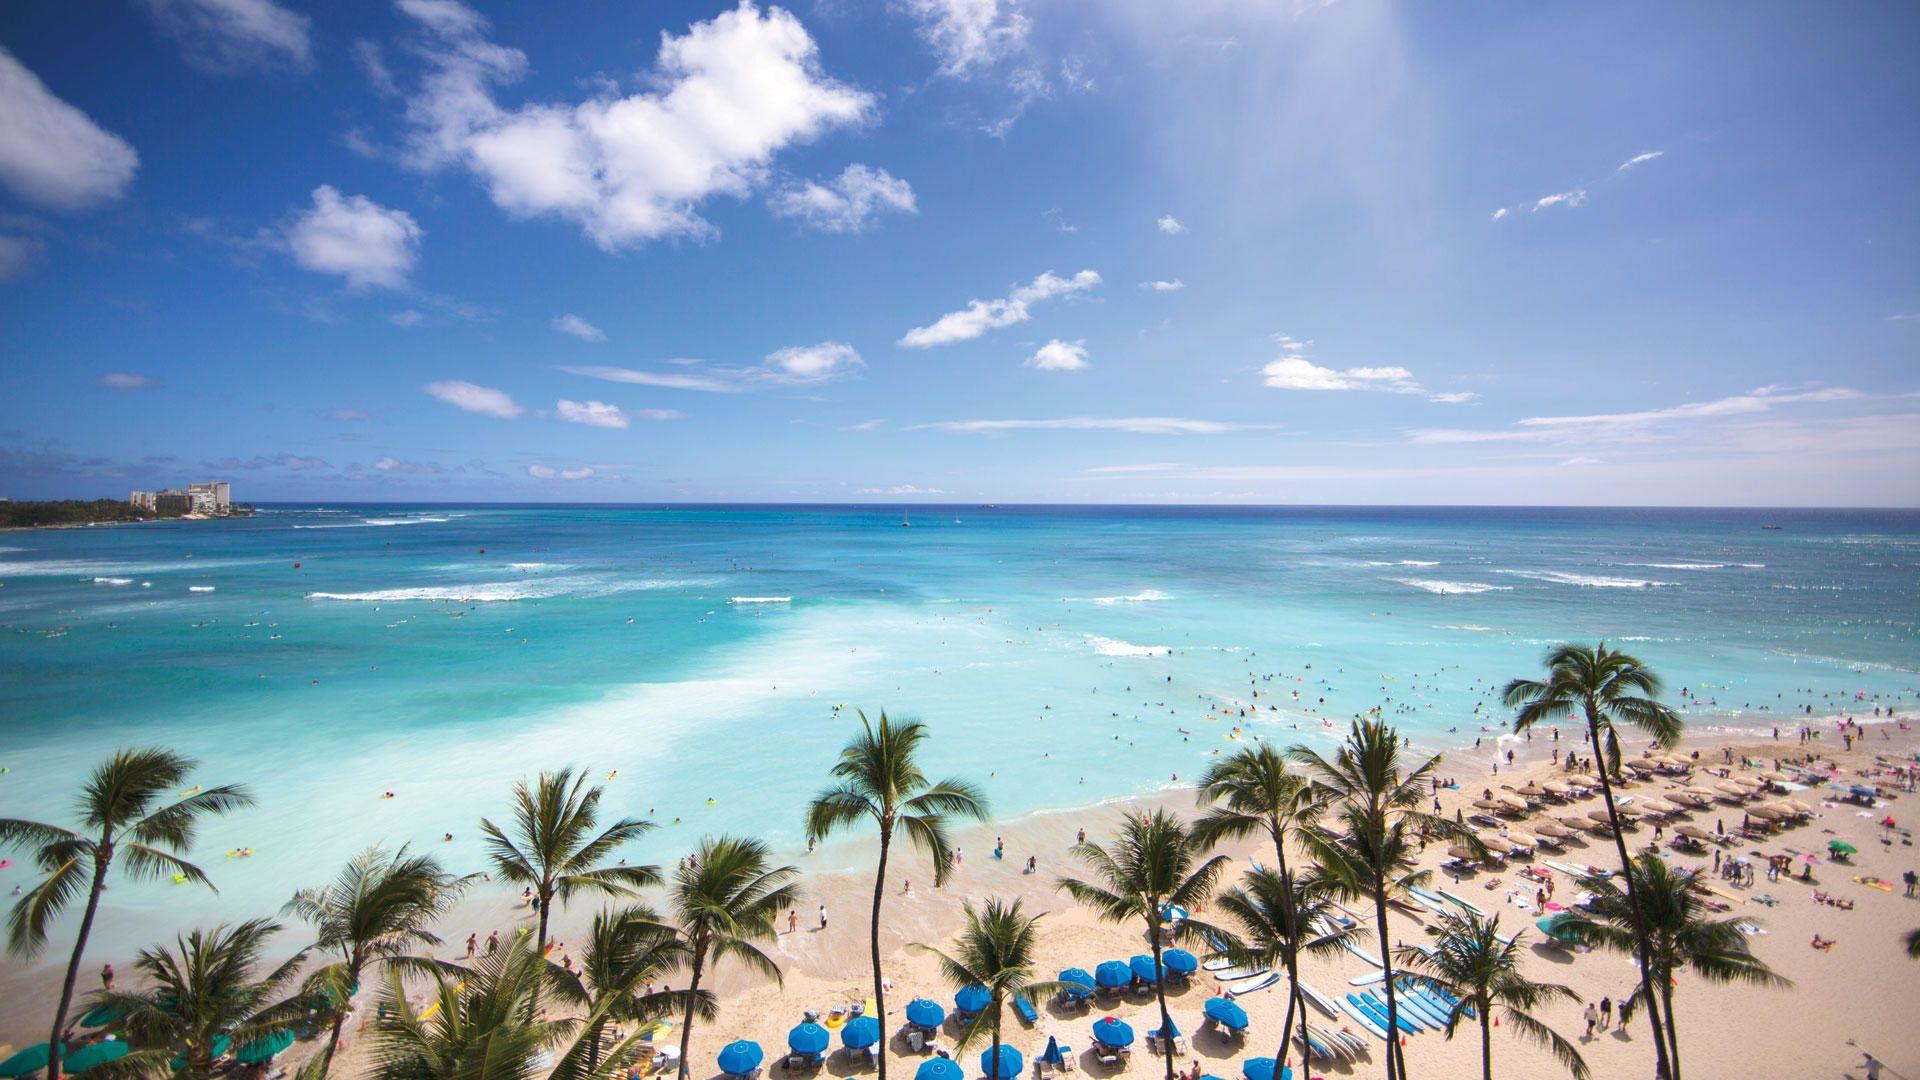 Waikiki Beach Widescreen Image. Beautiful image HD Picture